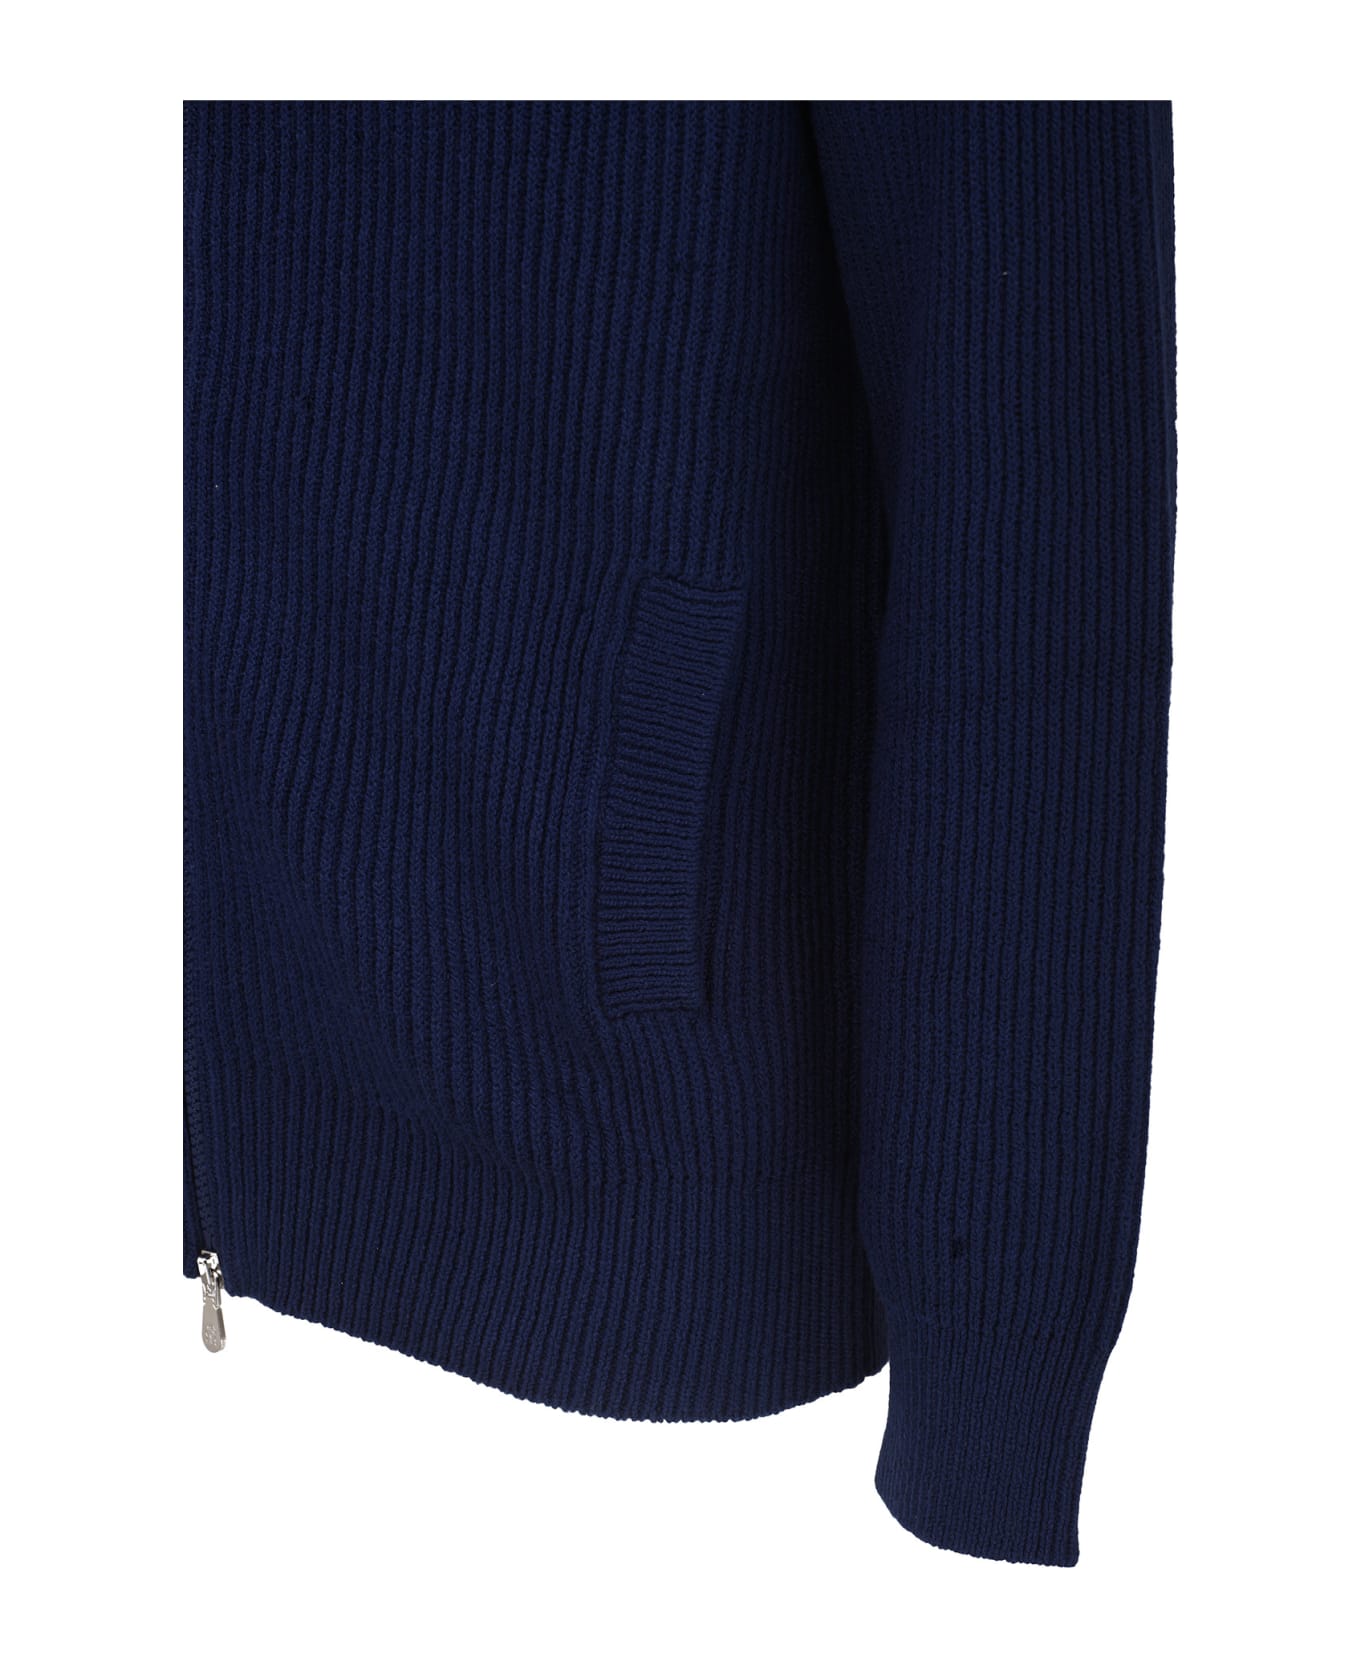 Brunello Cucinelli Sweaters Blue - Blue カーディガン